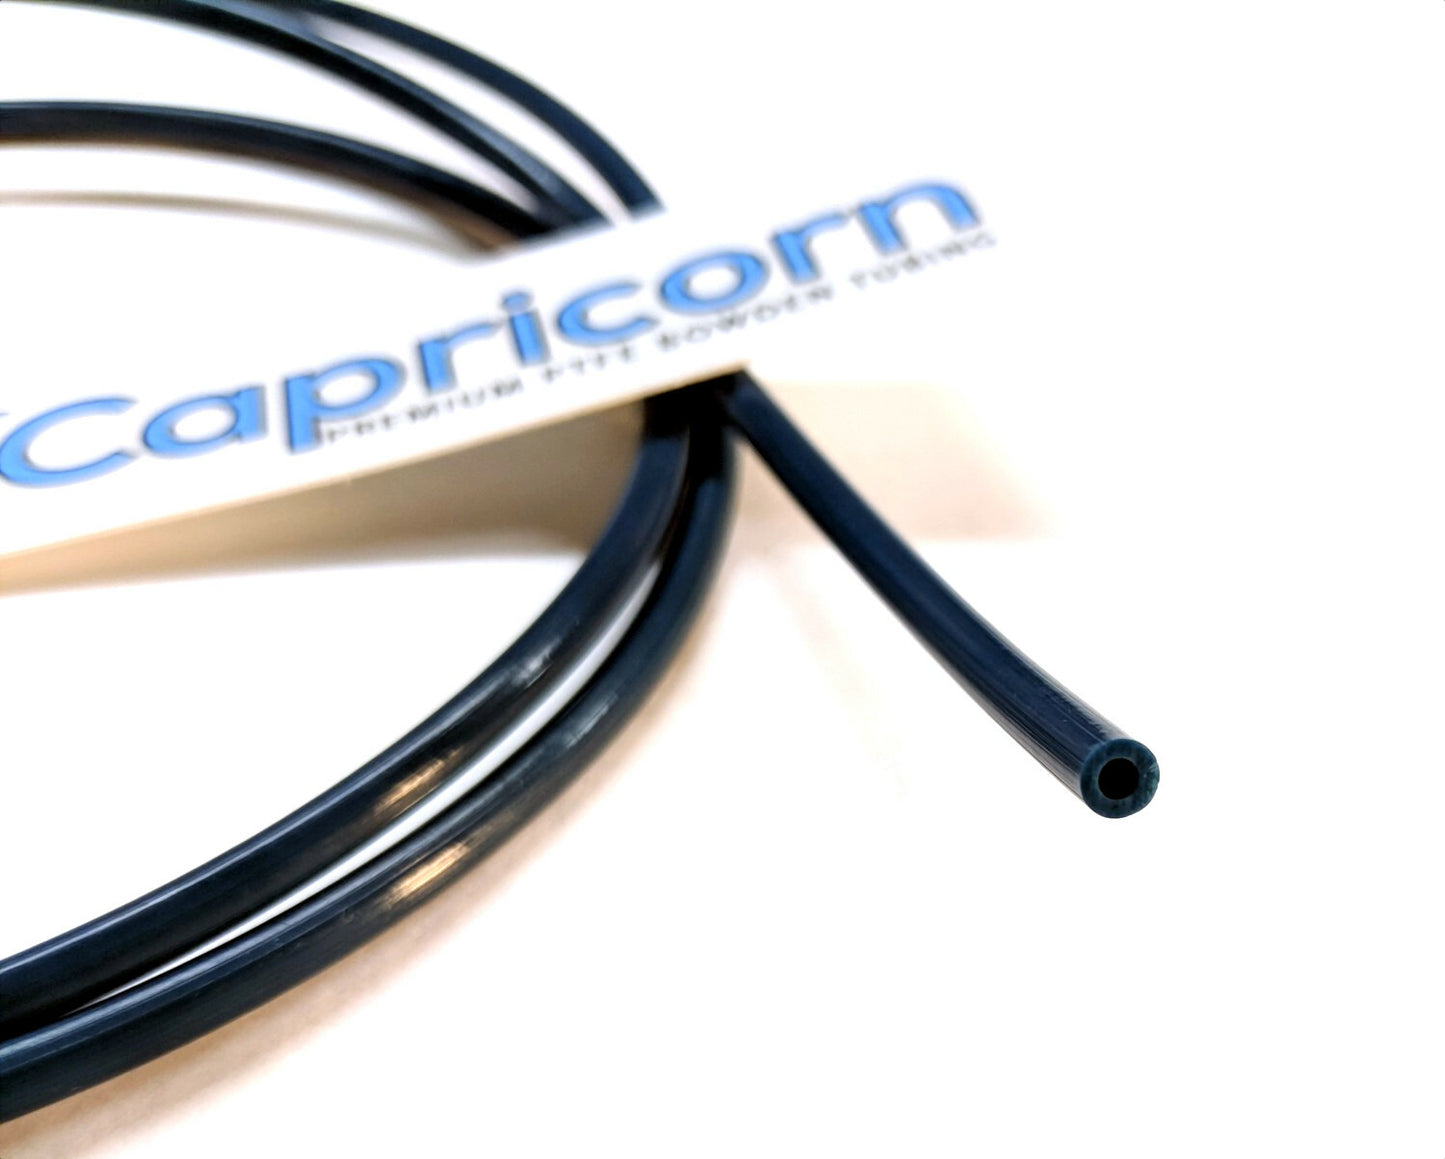 Capricorn XS Premium PTFE tubing for 1.75mm filament